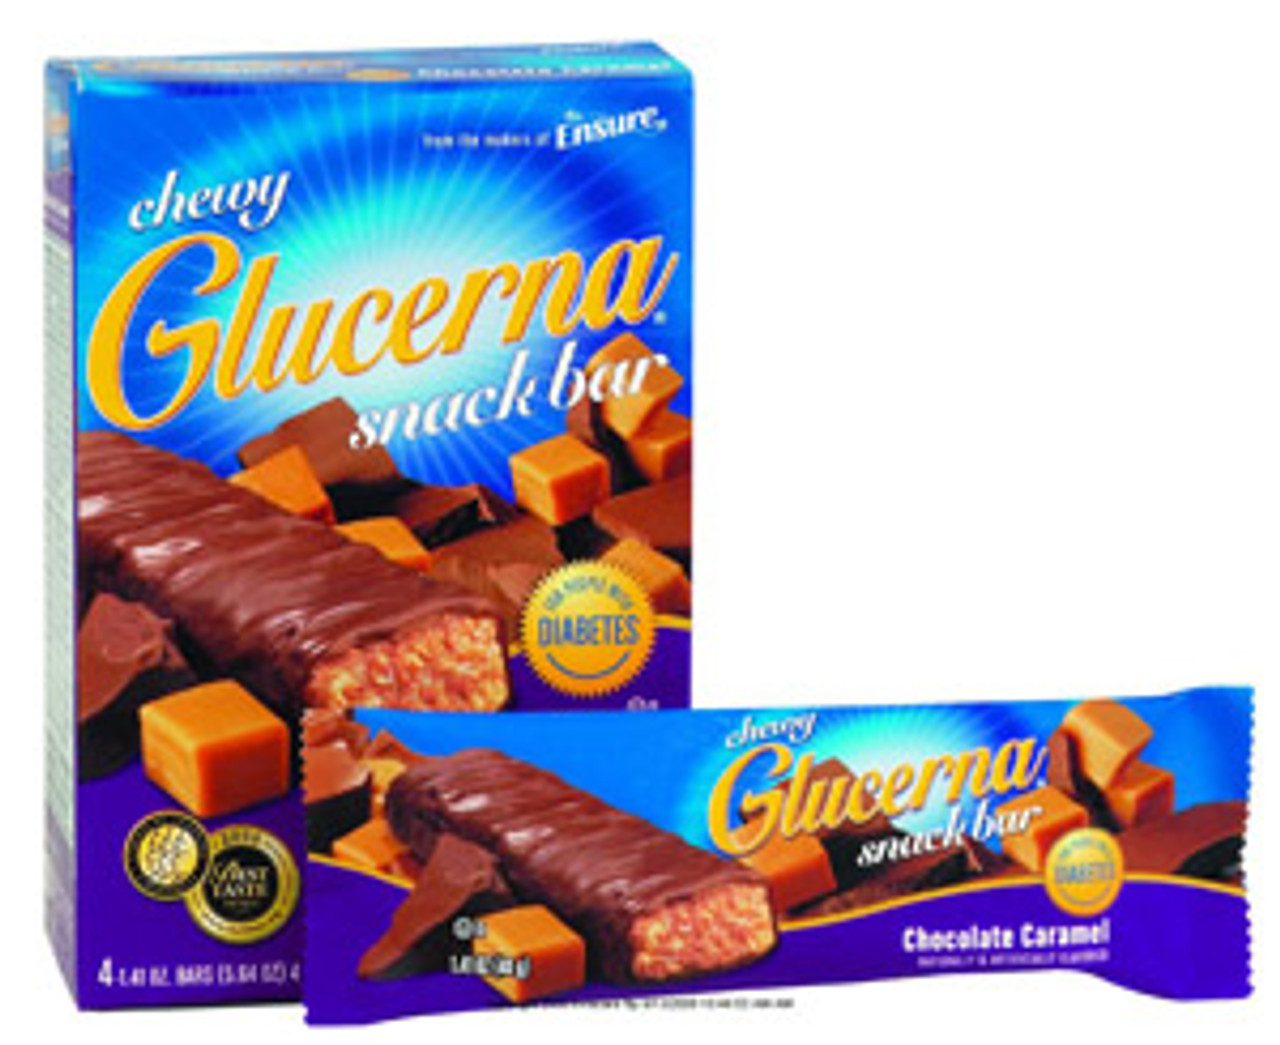 Glucerna® Snack Bar ROS56957CS